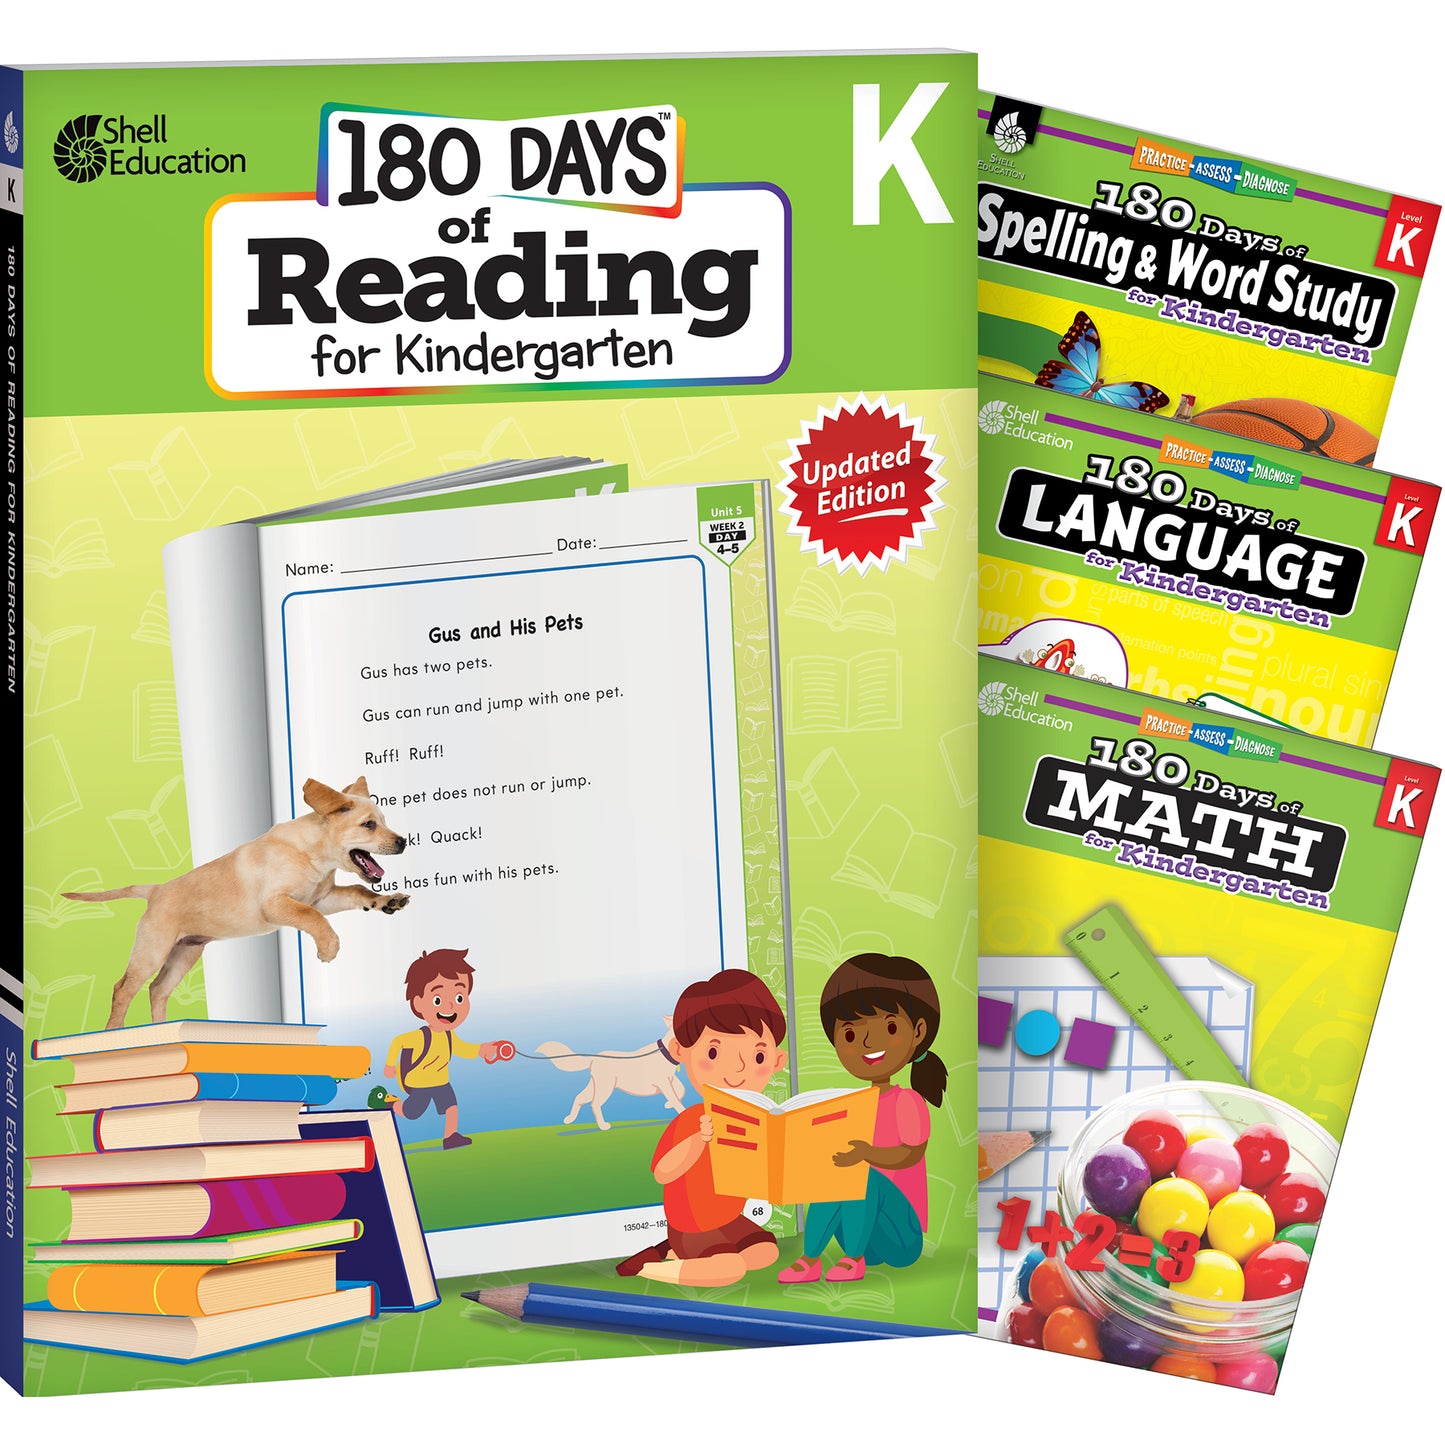 180 Days of Practice Reading, Spelling, Language, & Math for Kindergarten: 4-Book Set